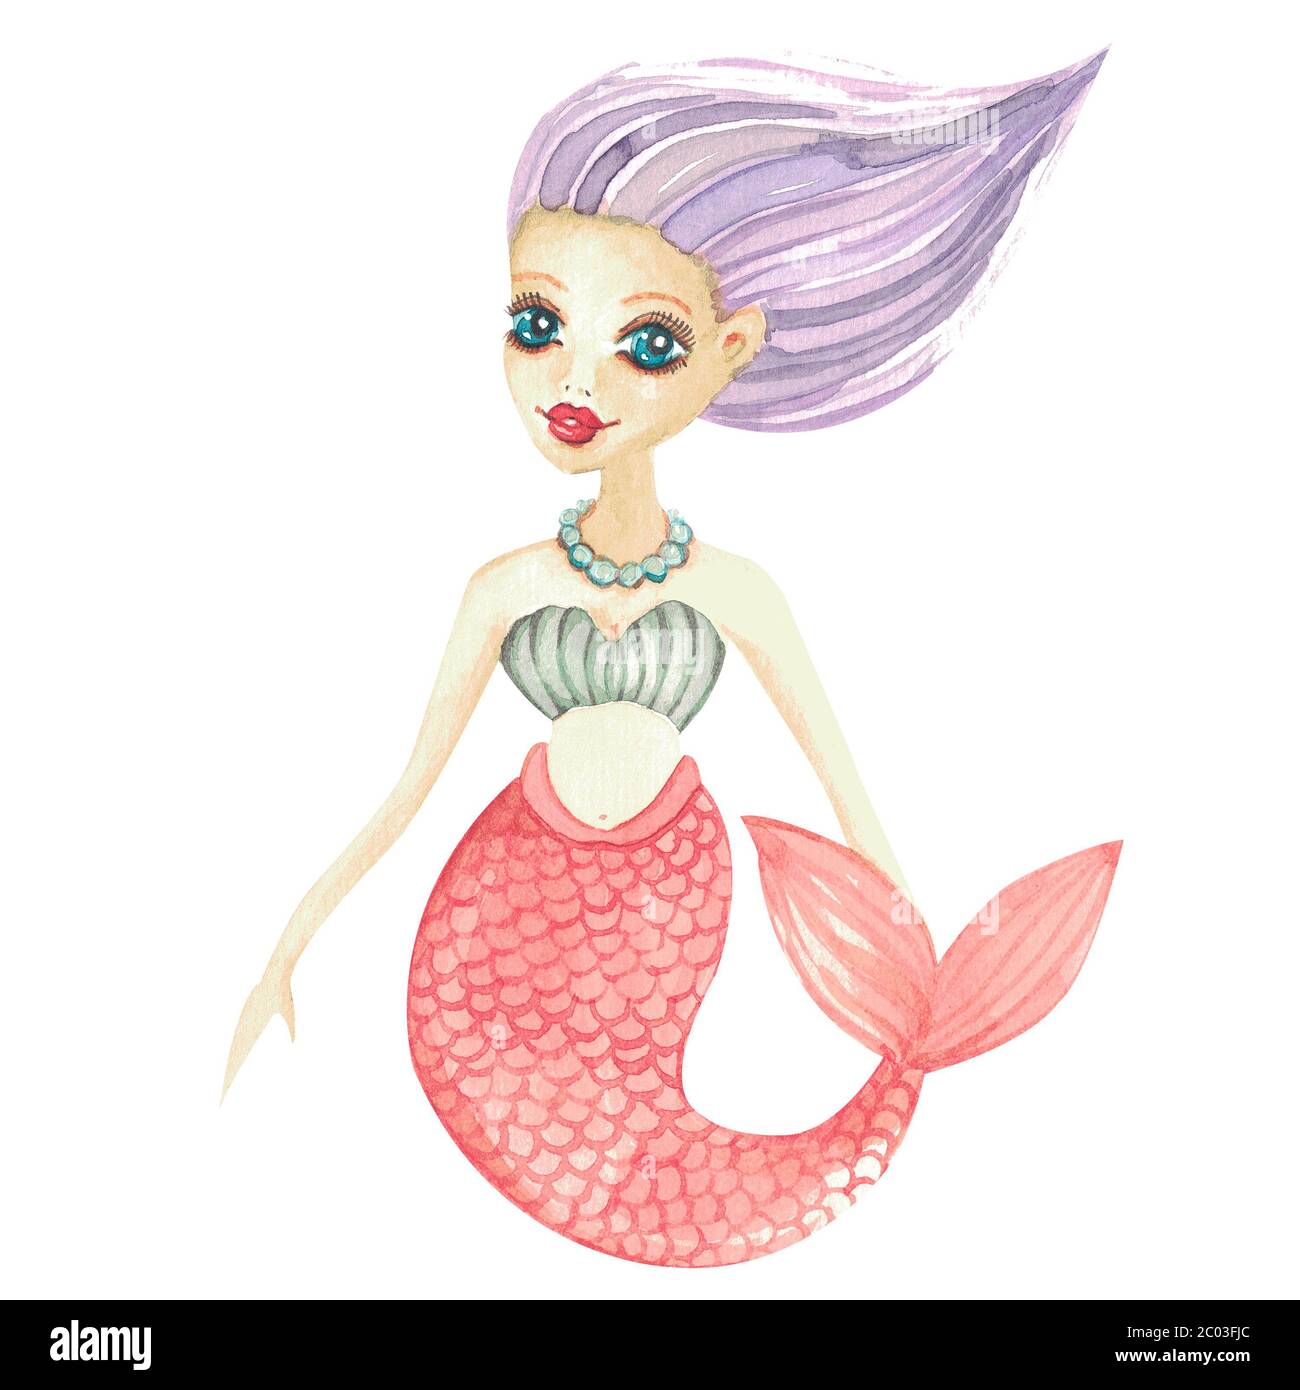 5519 Cartoon Mermaid Outline Images Stock Photos  Vectors  Shutterstock